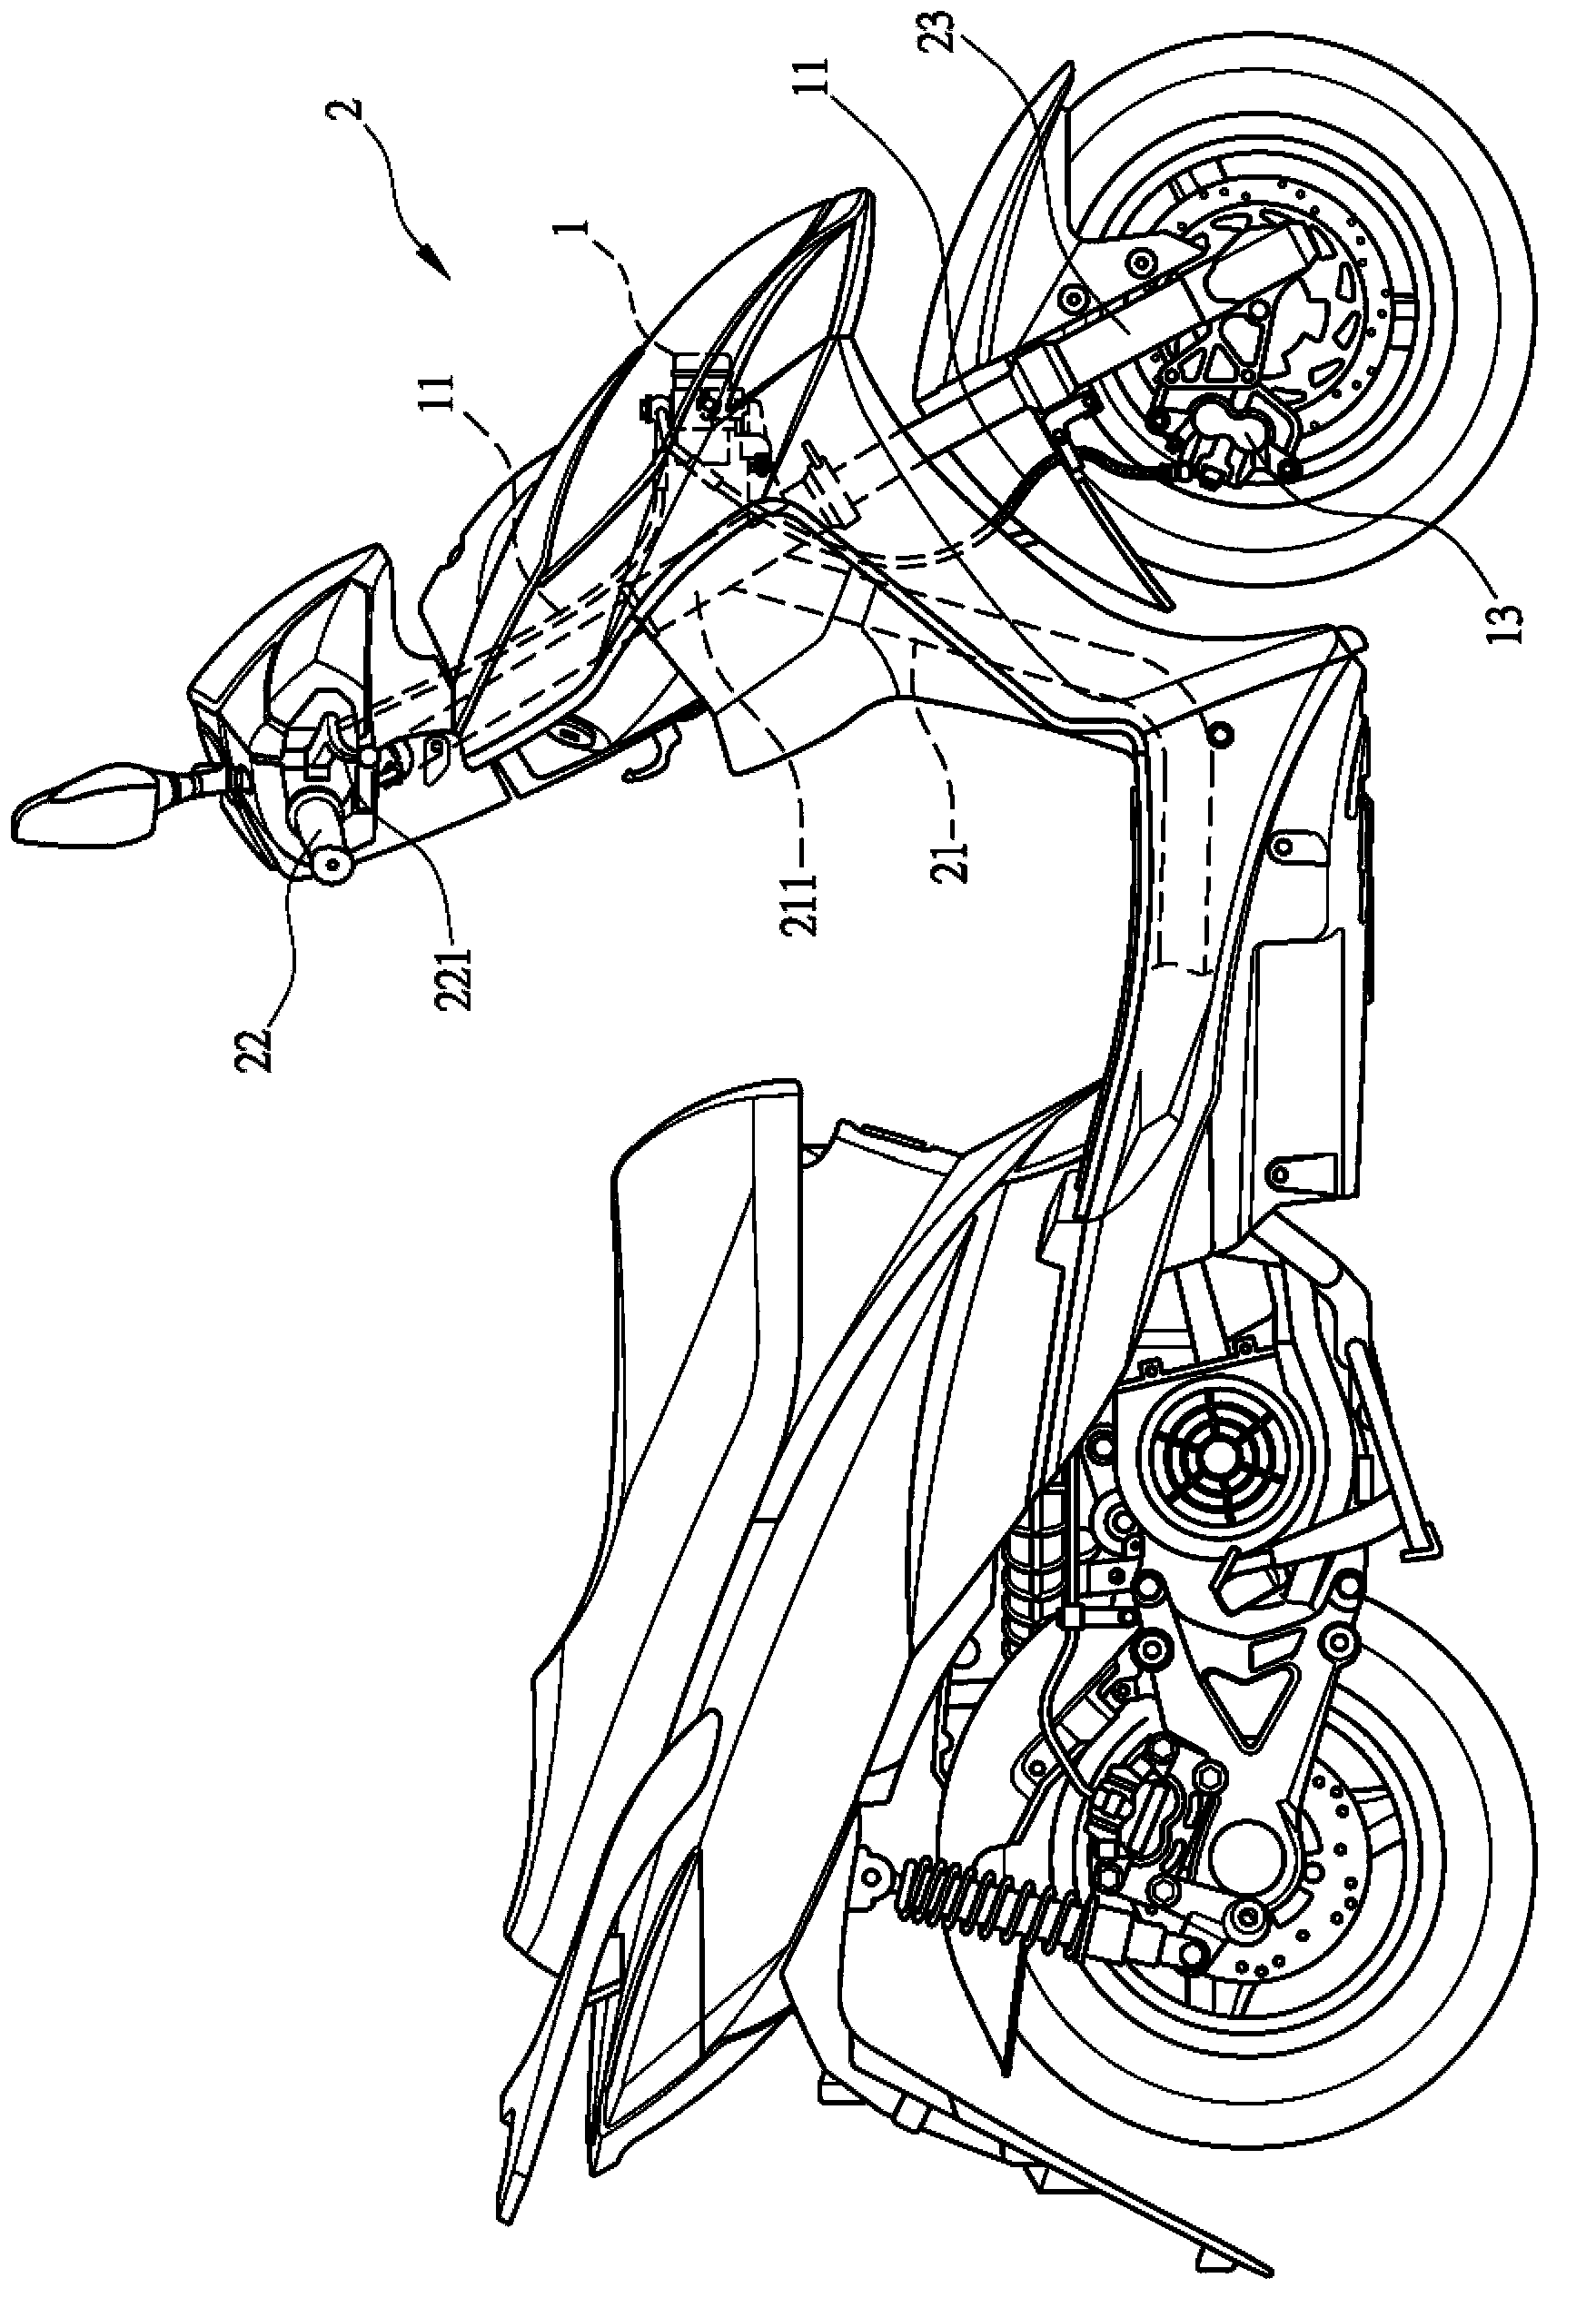 Motorcycle antiskid brake system structure